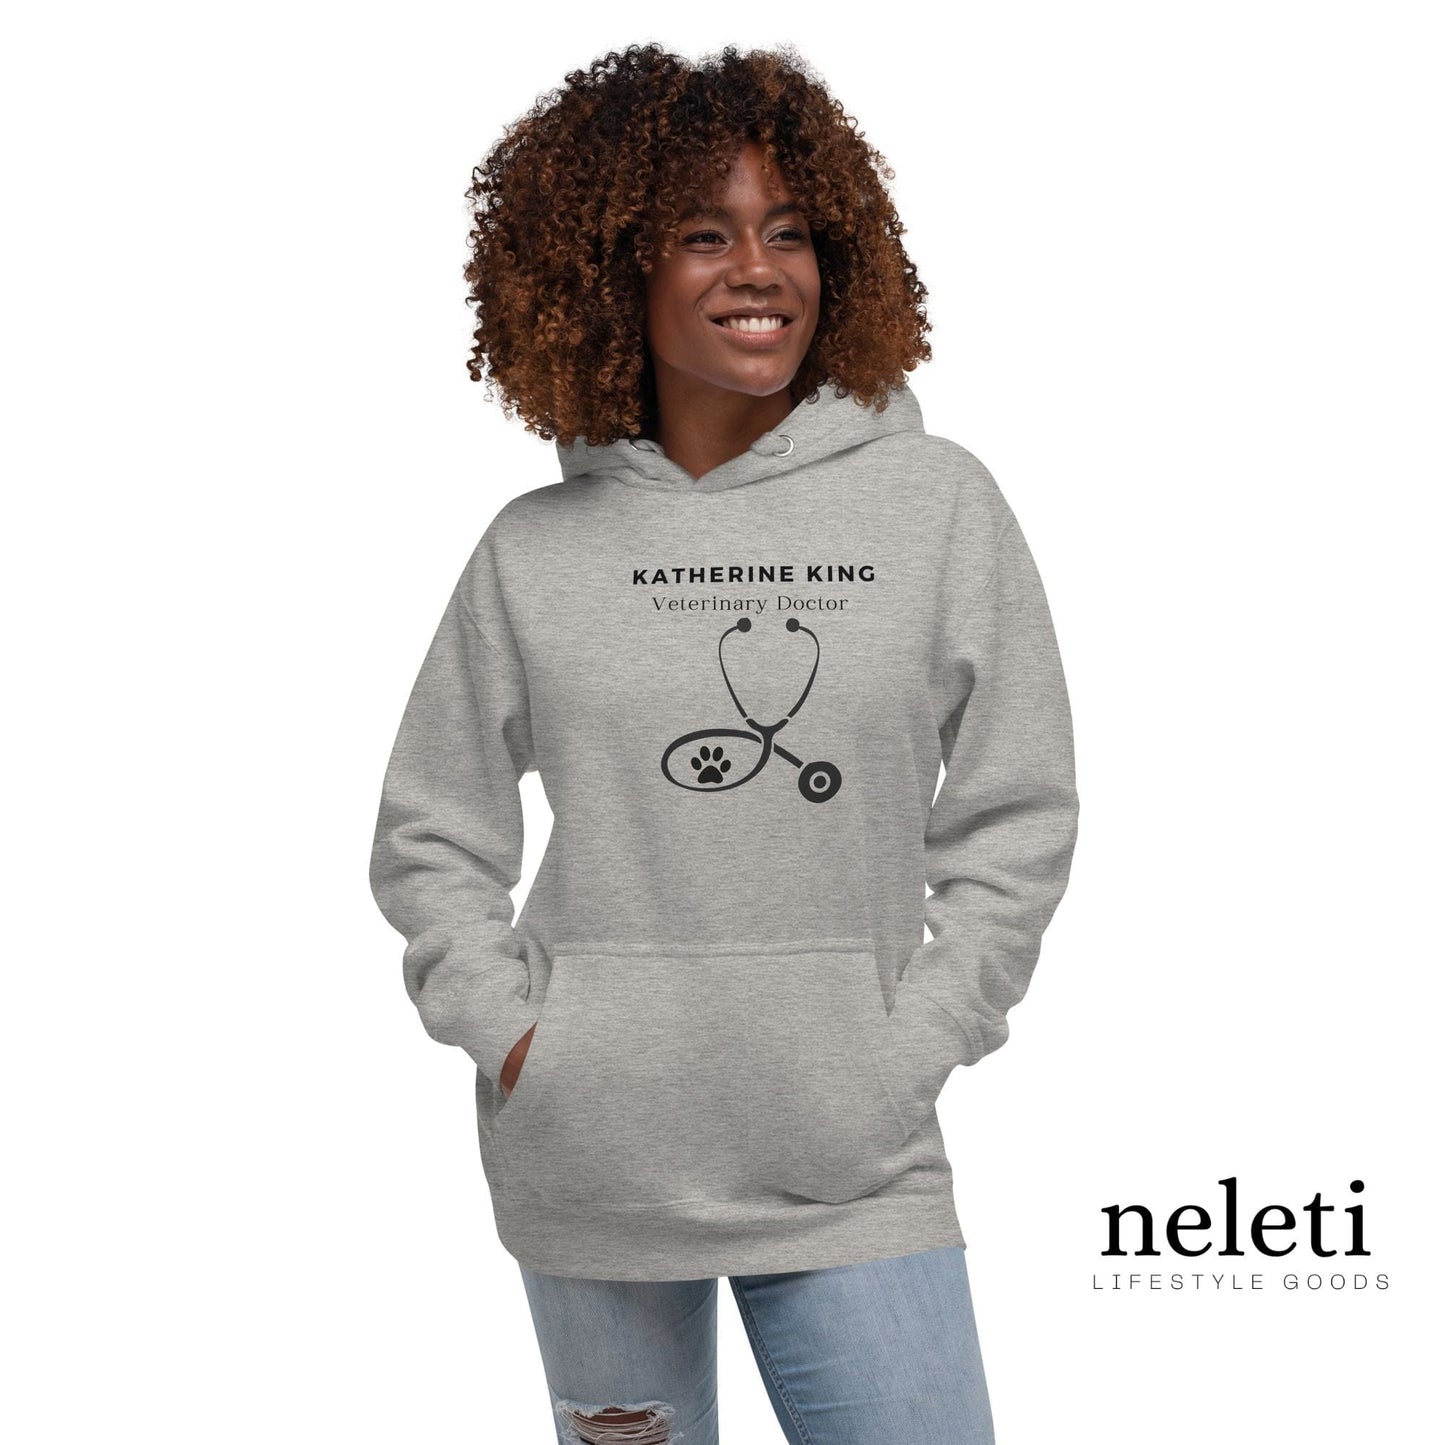 Custom Hoodies for Veterinarians - Exclusive at Neleti.com